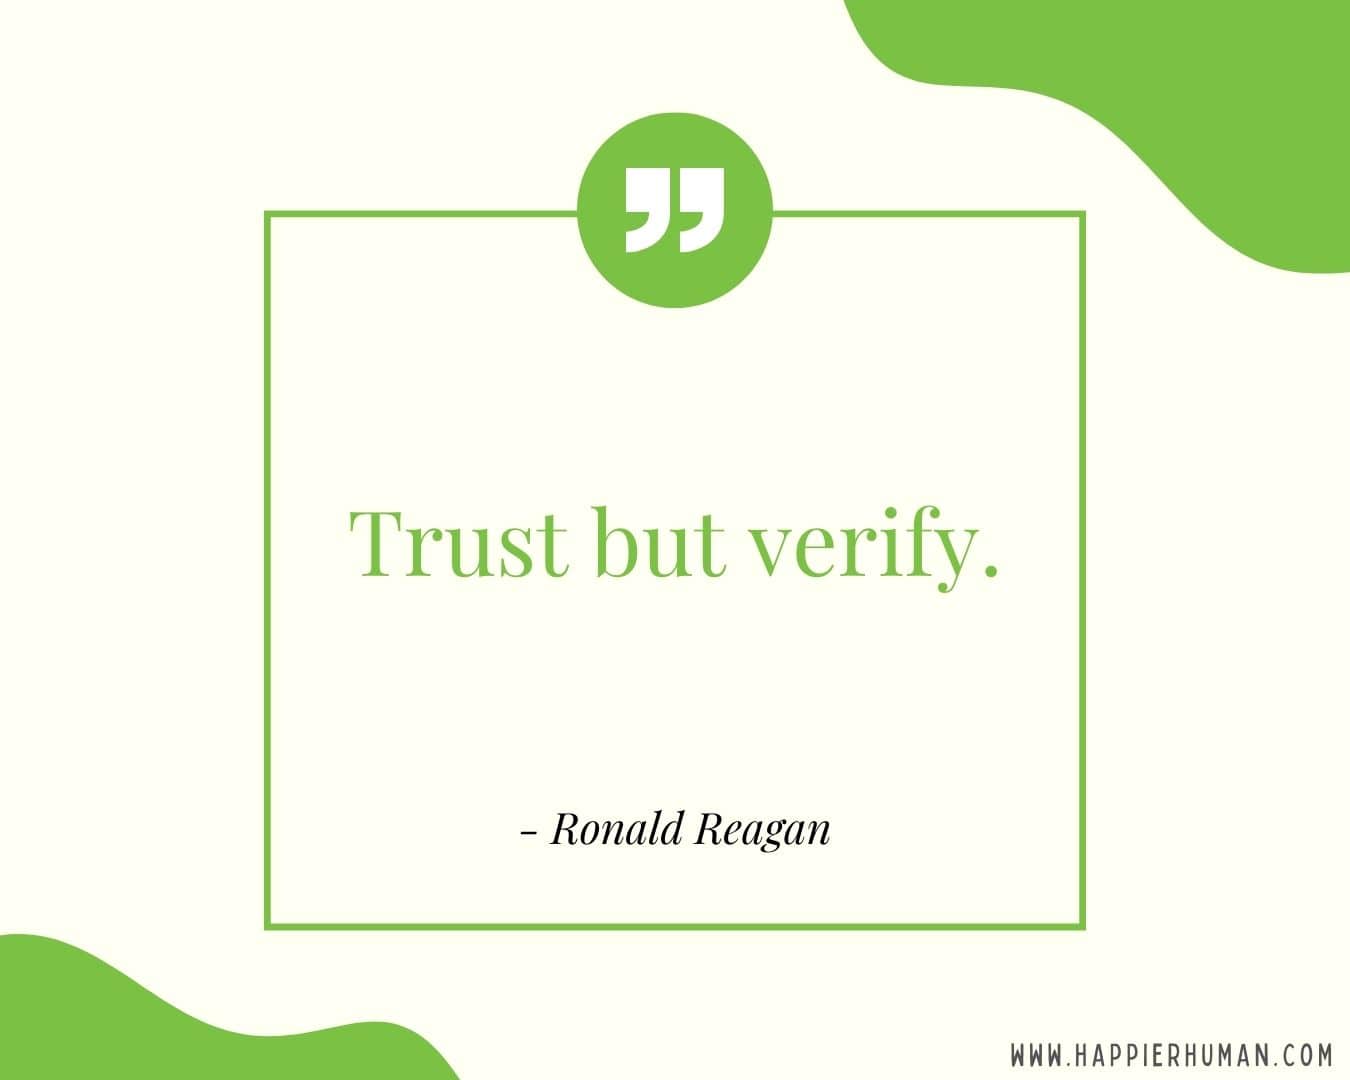 Broken Trust Quotes - “Trust but verify.” - Ronald Reagan